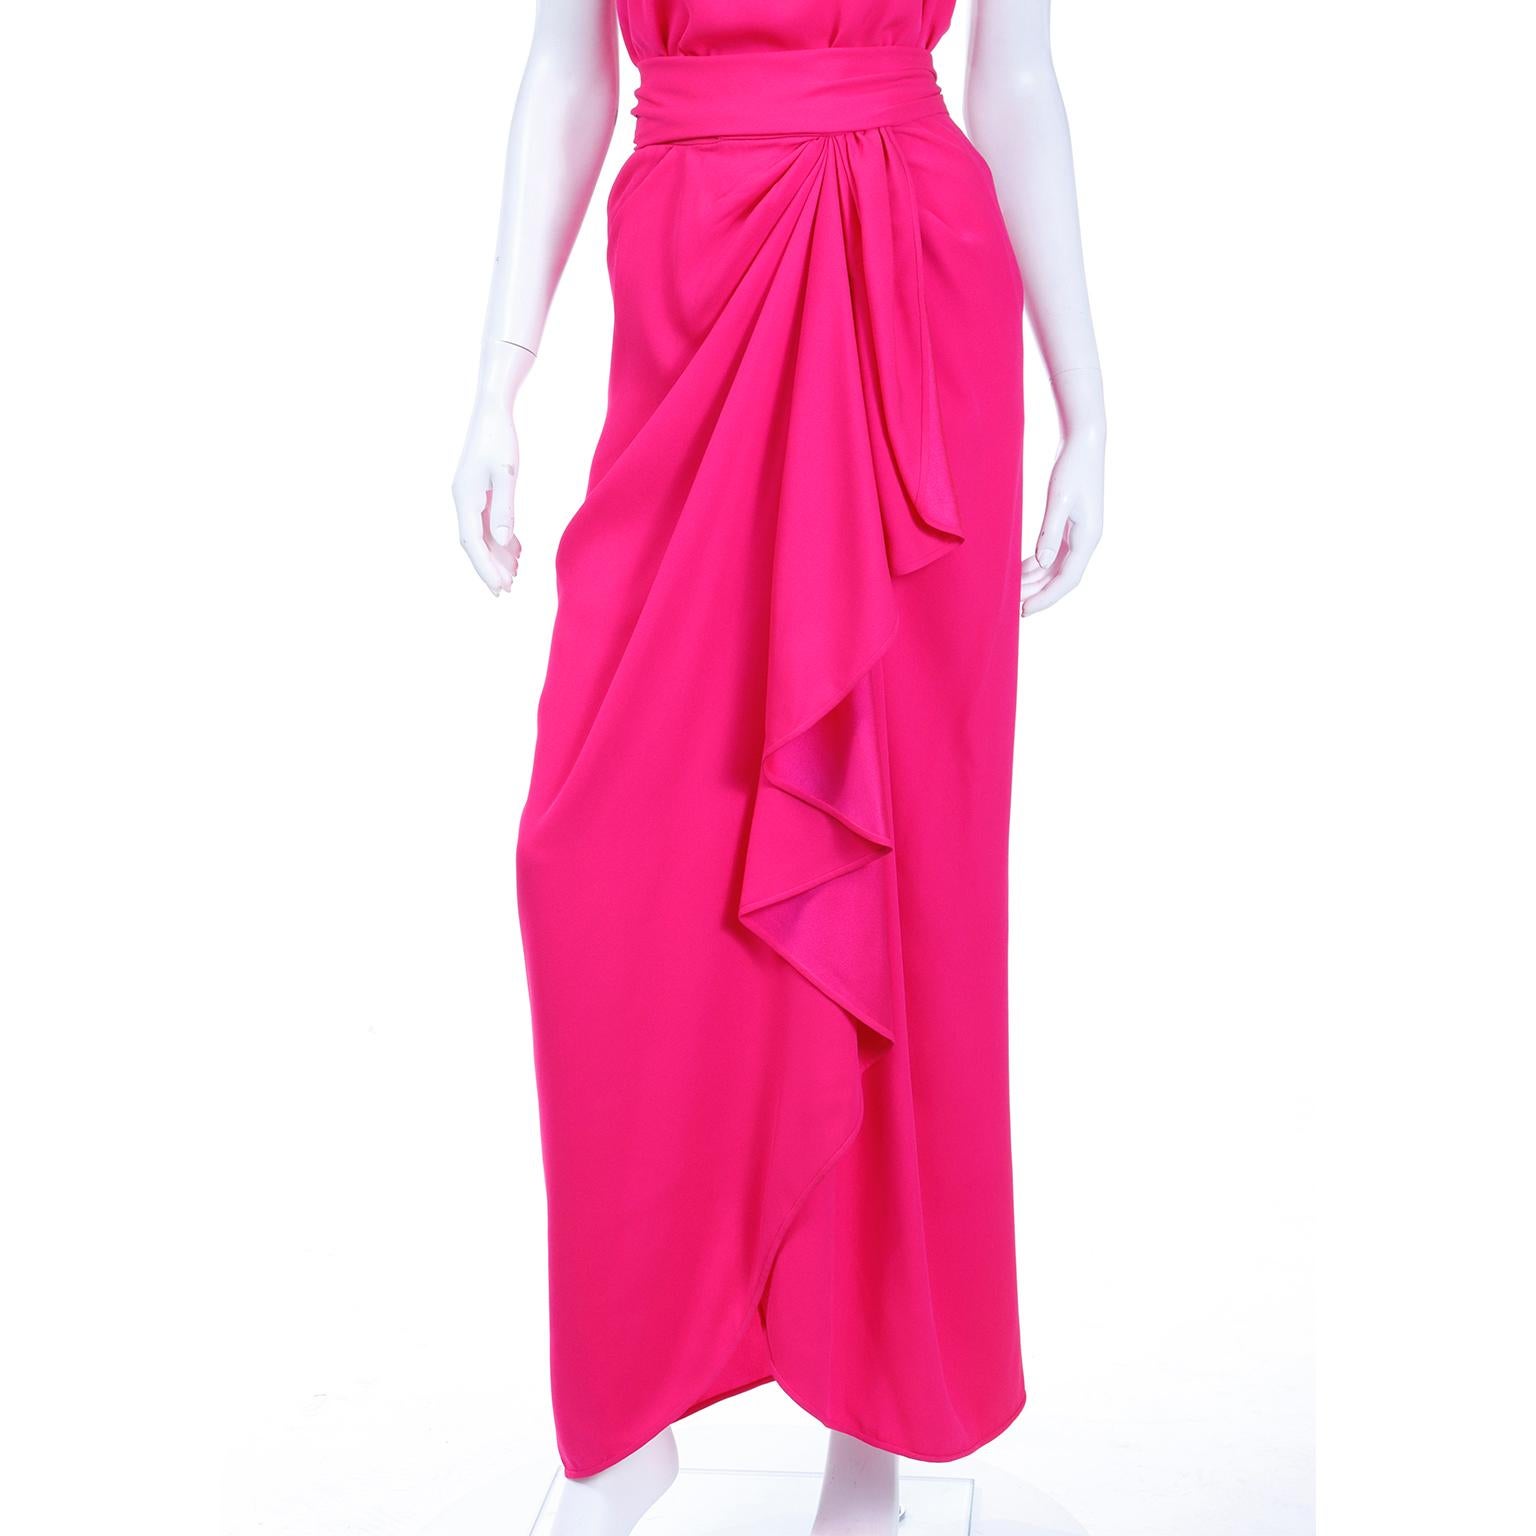 Yves Saint Laurent Haute Couture Pink Silk 2 Pc Evening Dress w Ruffled Skirt 4